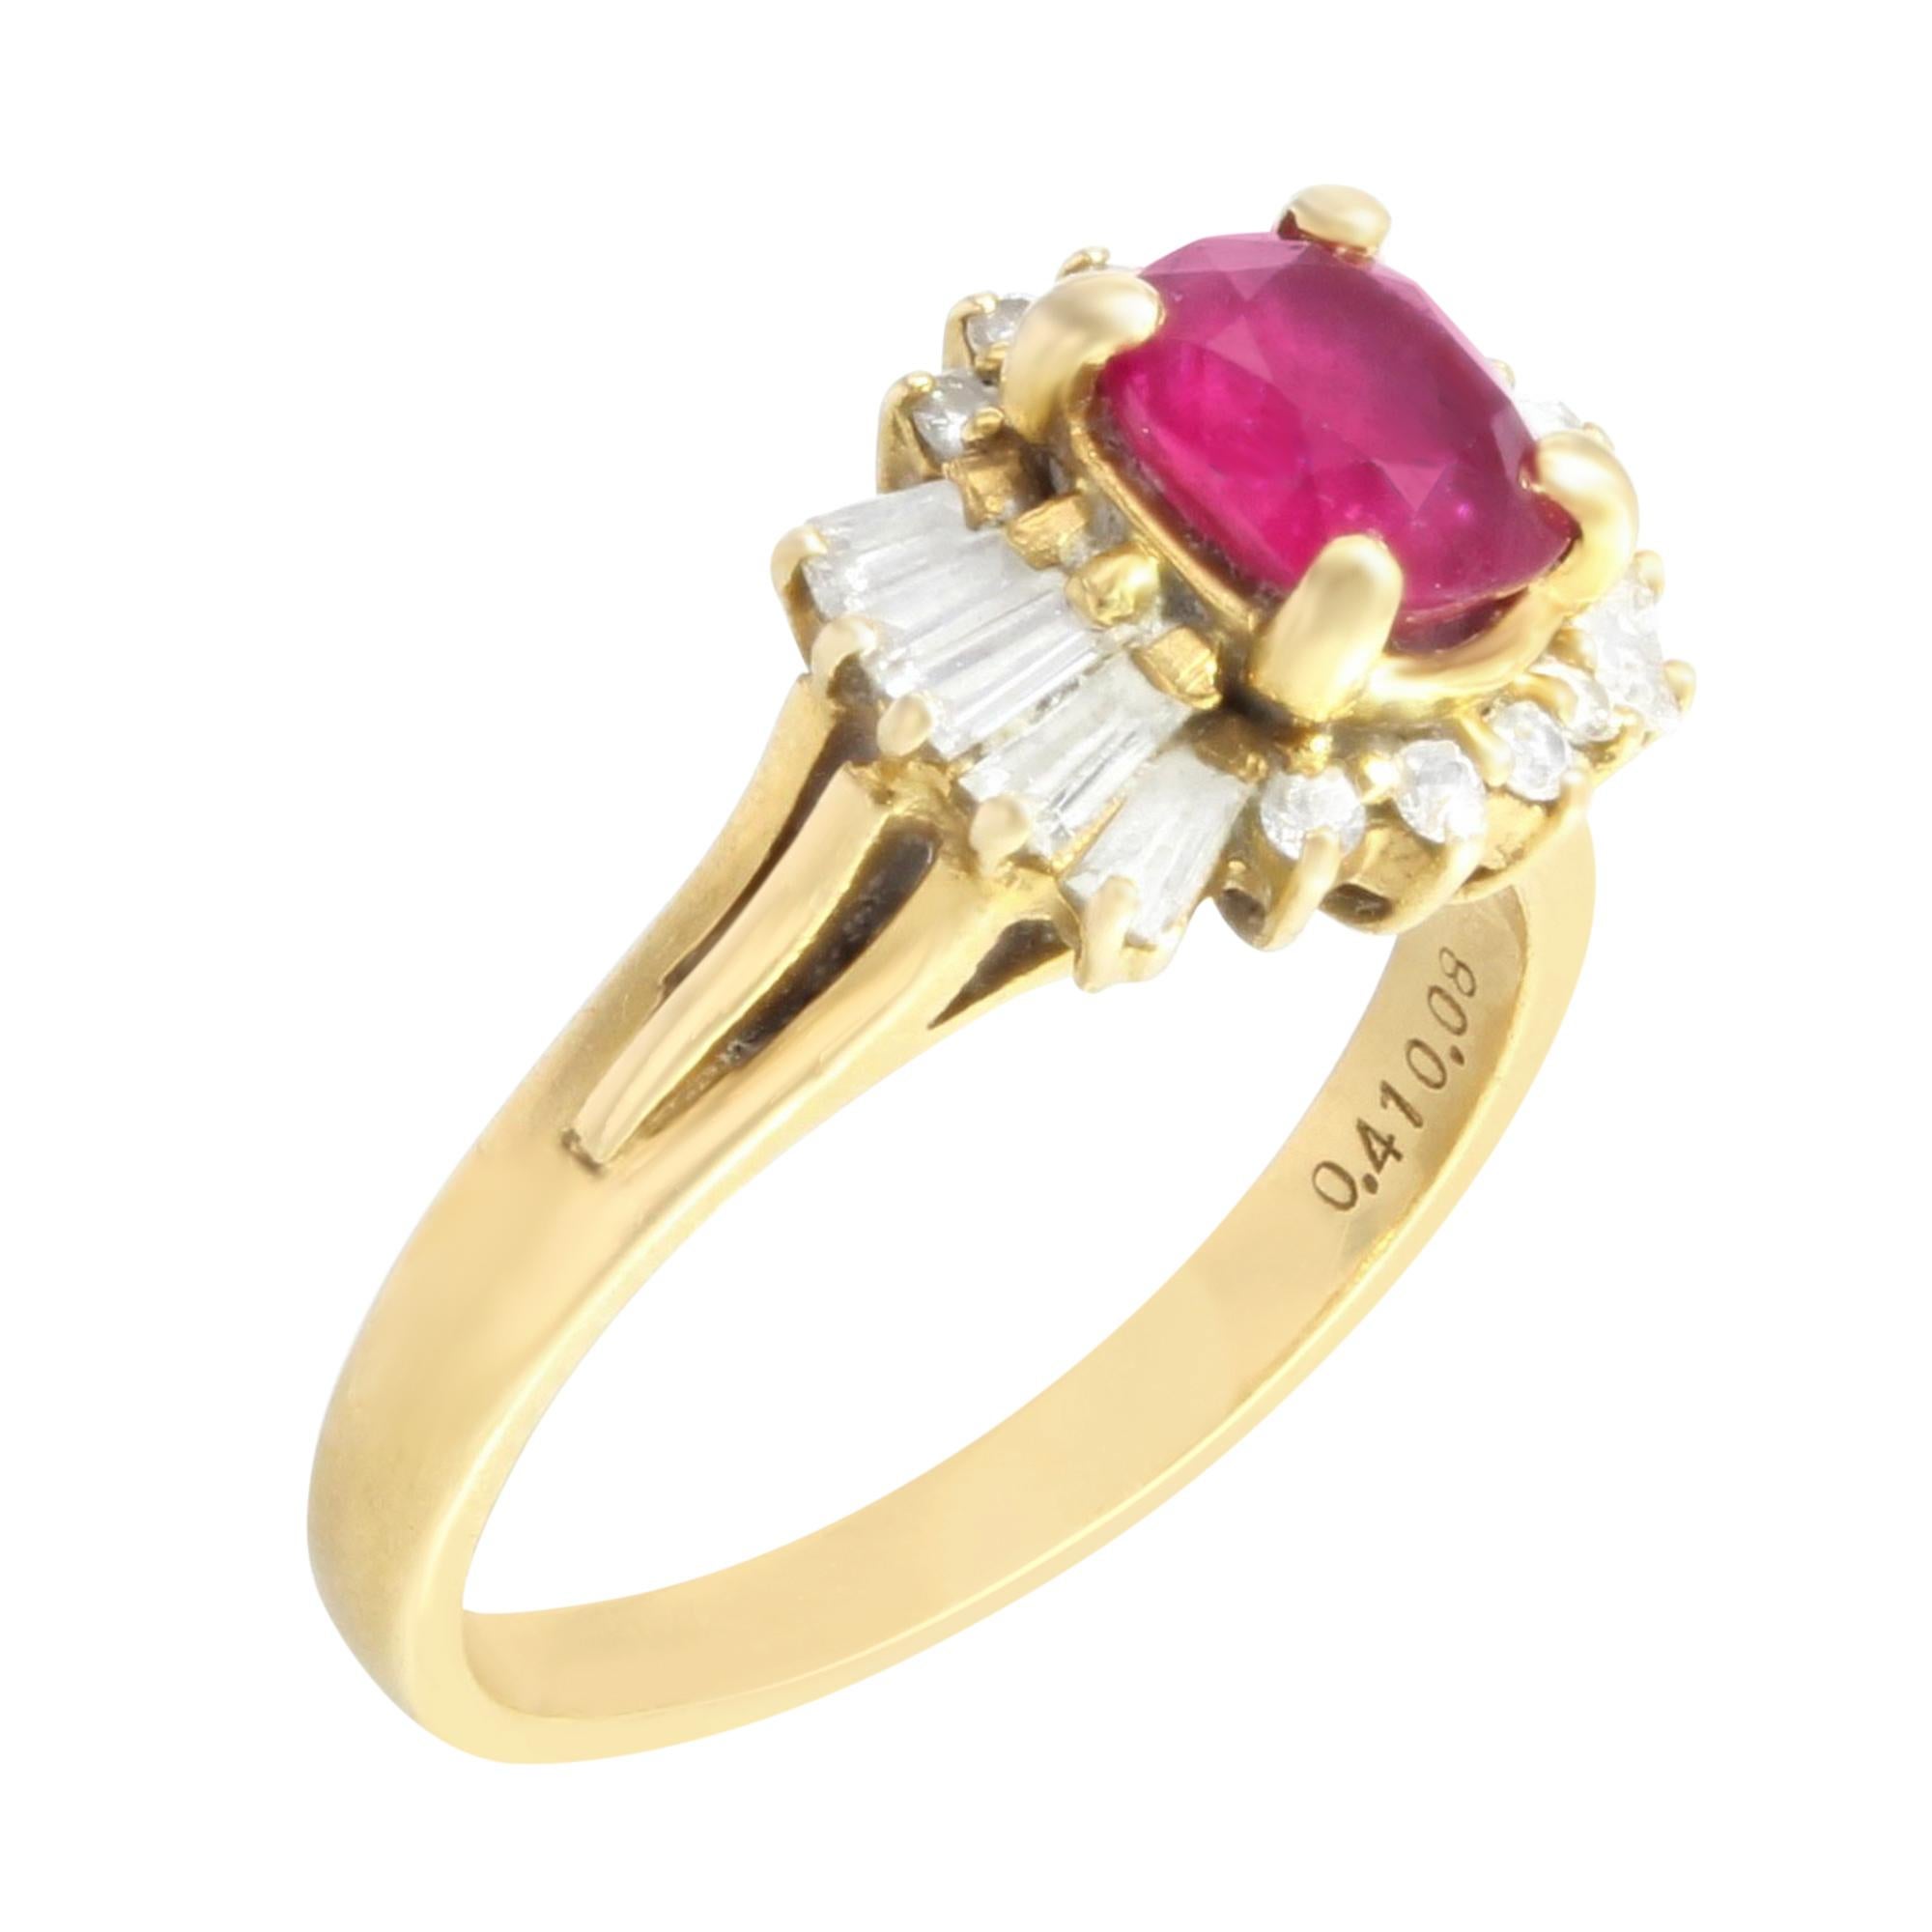 Rachel Koen 1.75ctw Rubies 0.50ctw Diamonds Ladies Jewelry Set 14K Yellow Gold For Sale 1